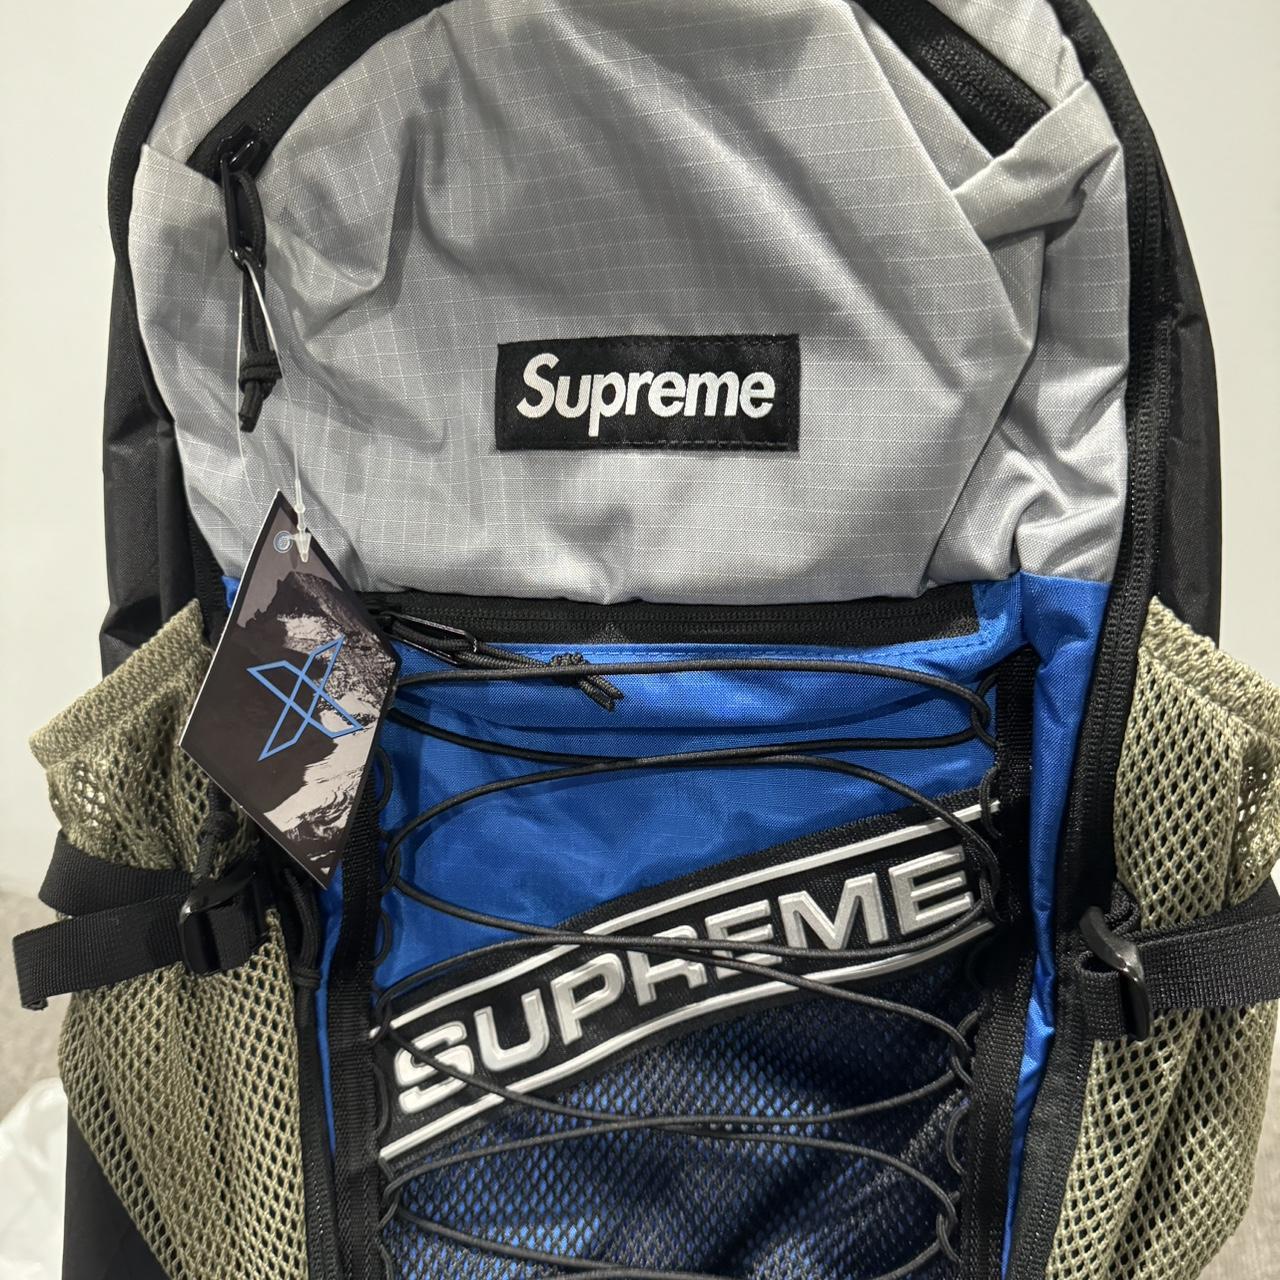 Supreme X The North Face Leather Back Pack color - Depop